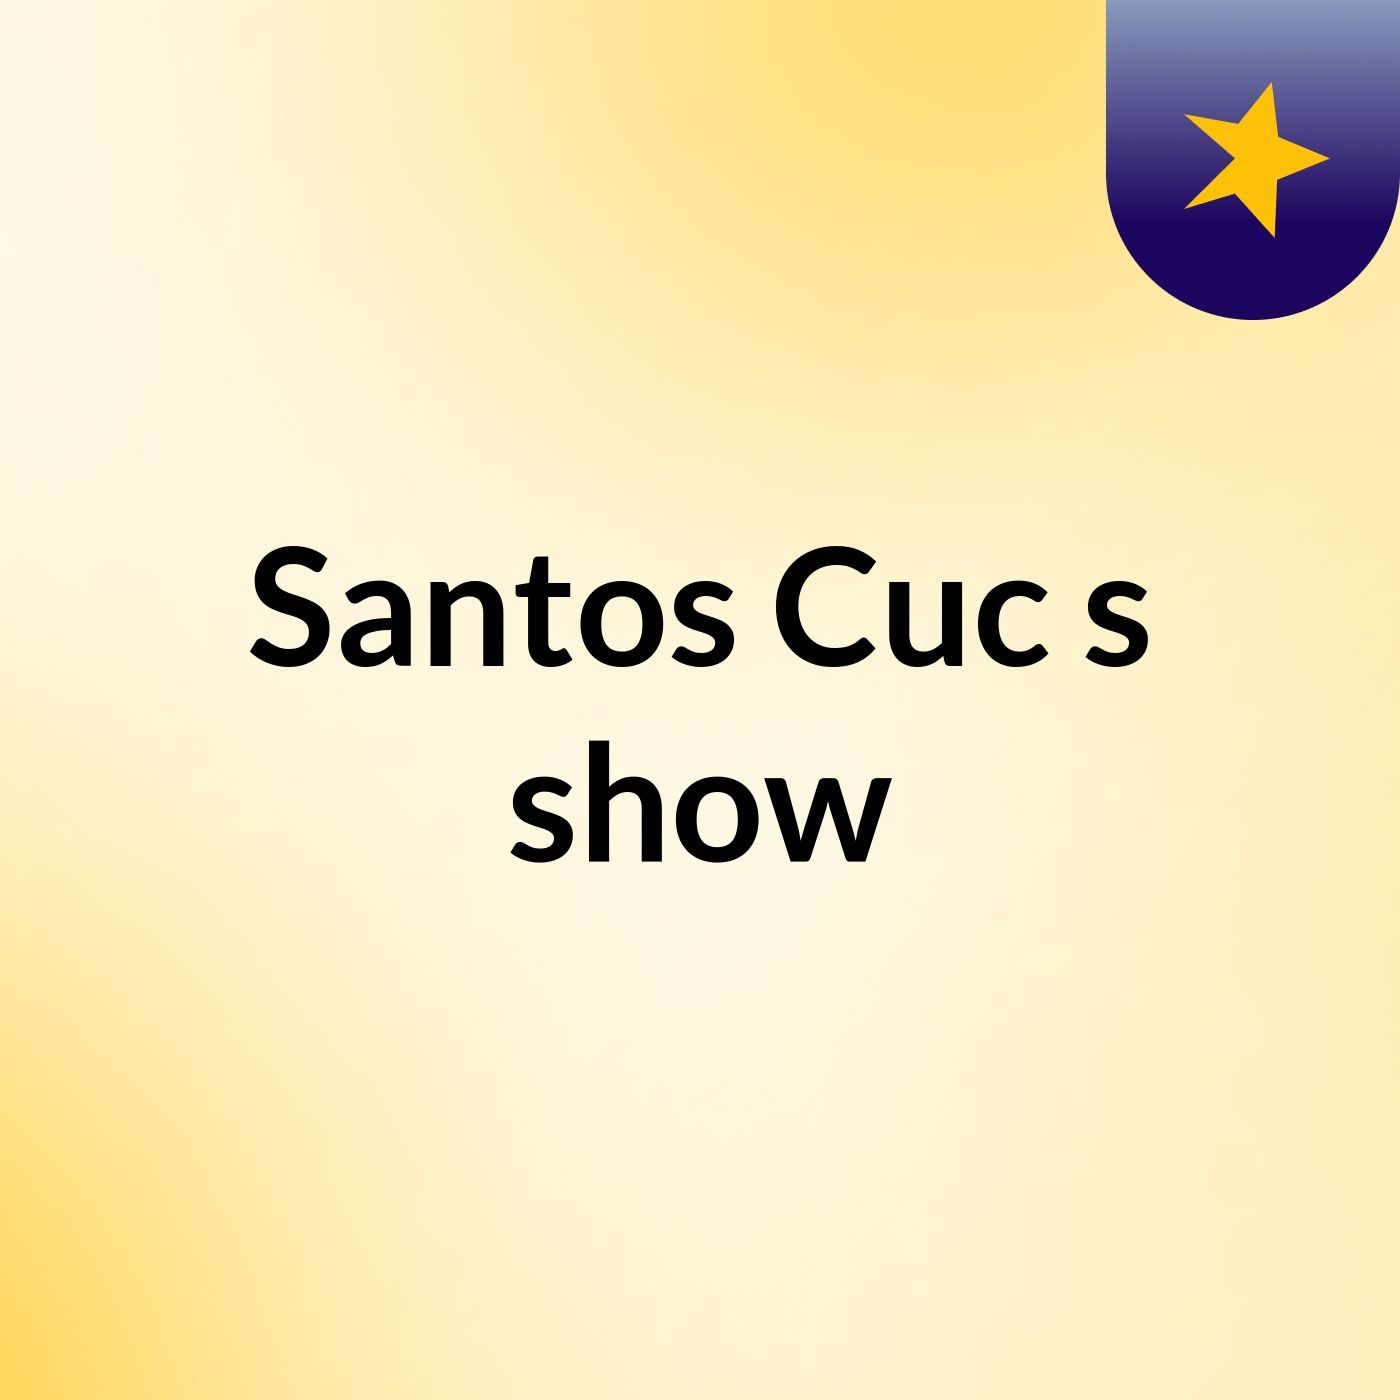 Santos Cuc's show